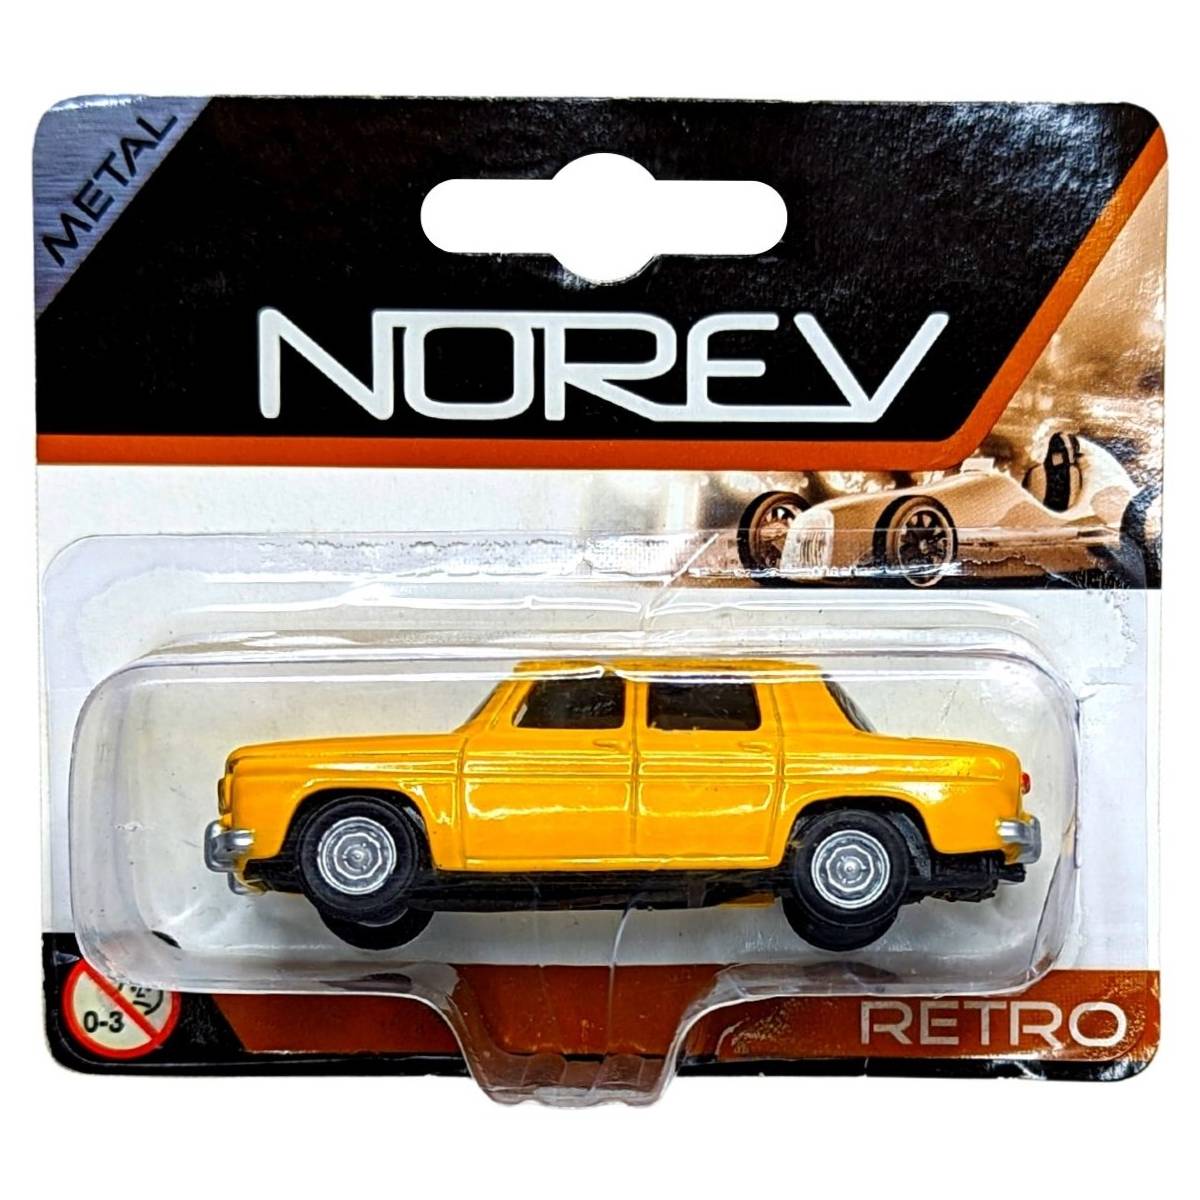 Norev Retro - Mini Voiture de Collection - Renault R8 Jaune